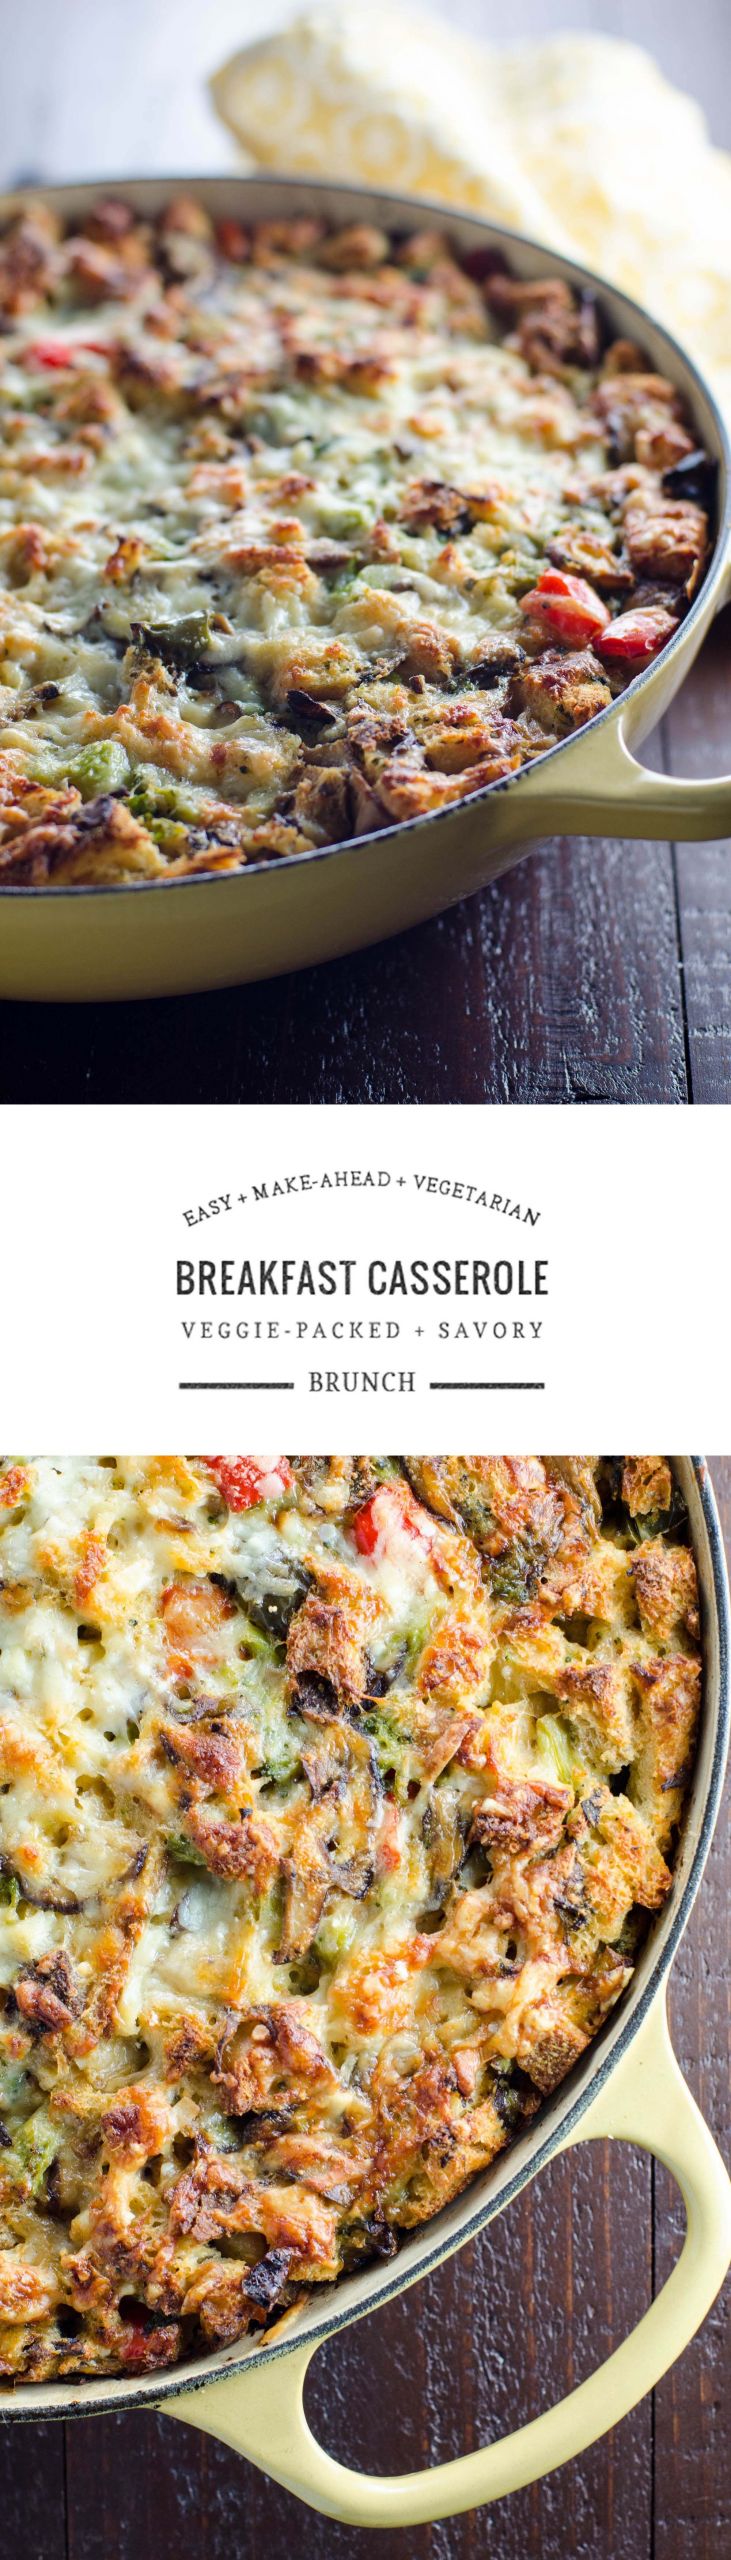 Vegan Brunch Recipes Make Ahead
 Easy Ve arian Make Ahead Breakfast Casserole